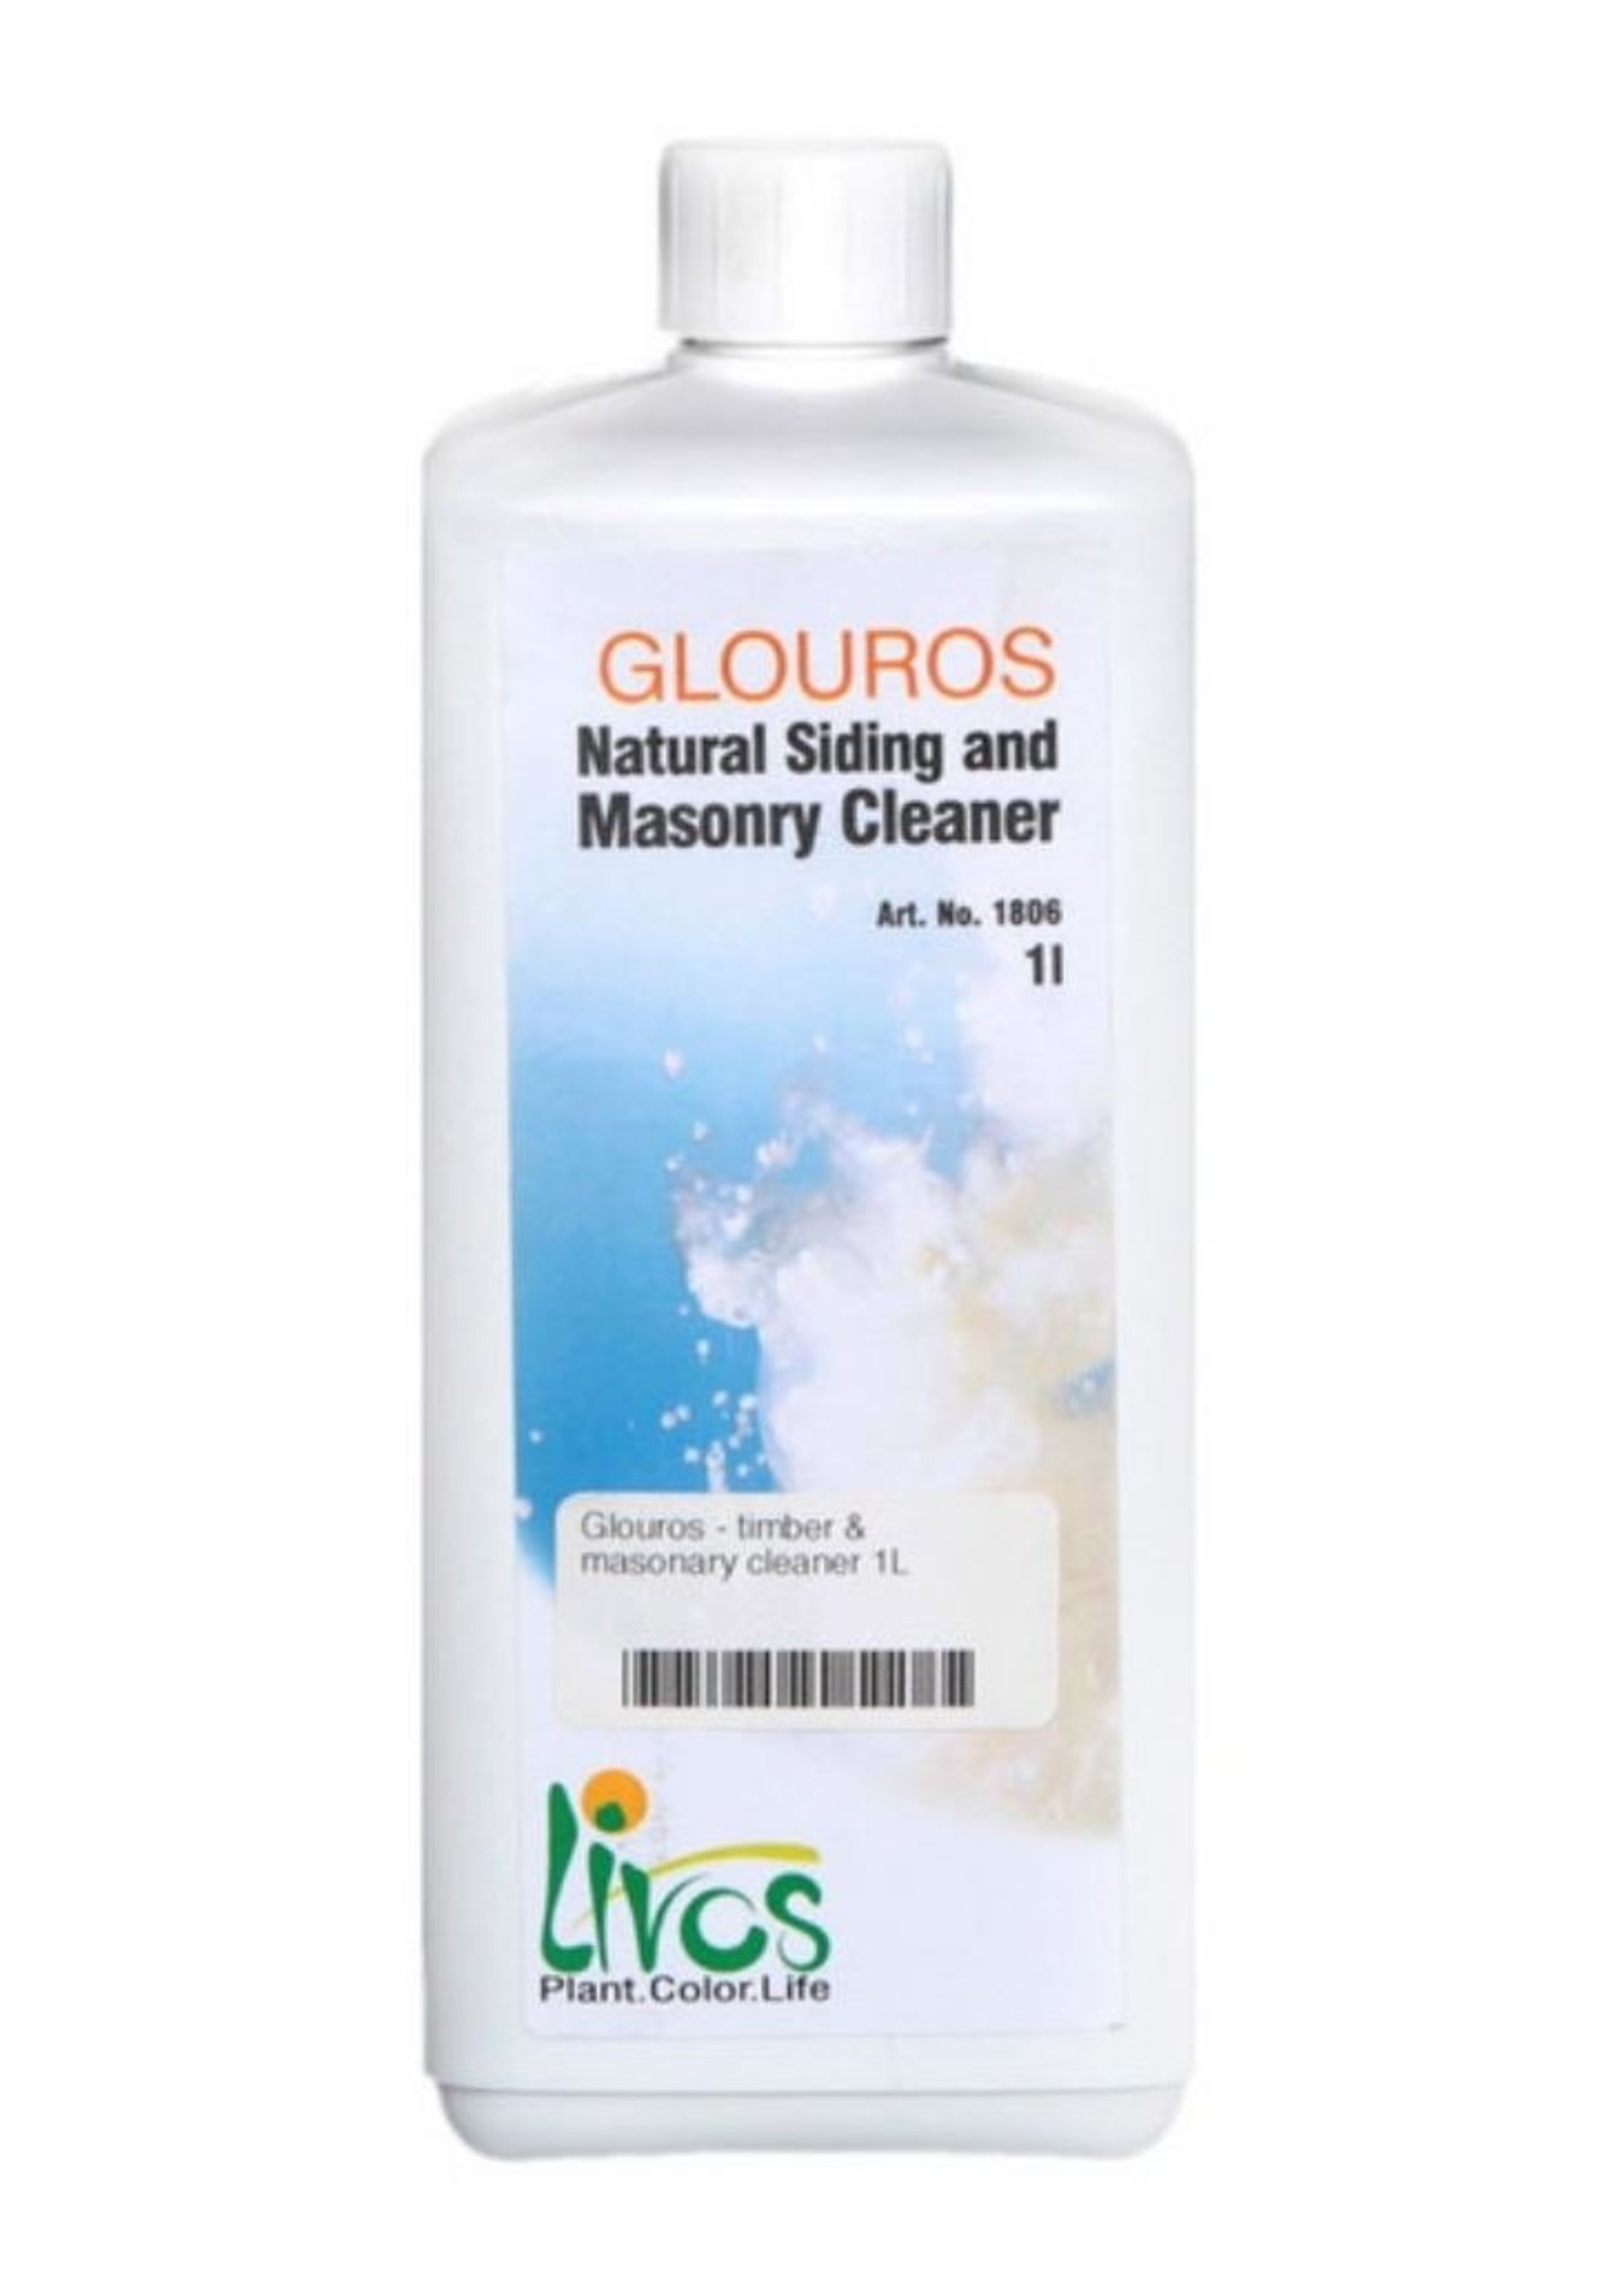 LIVOS Glouros - Timber & Masonry Cleaner